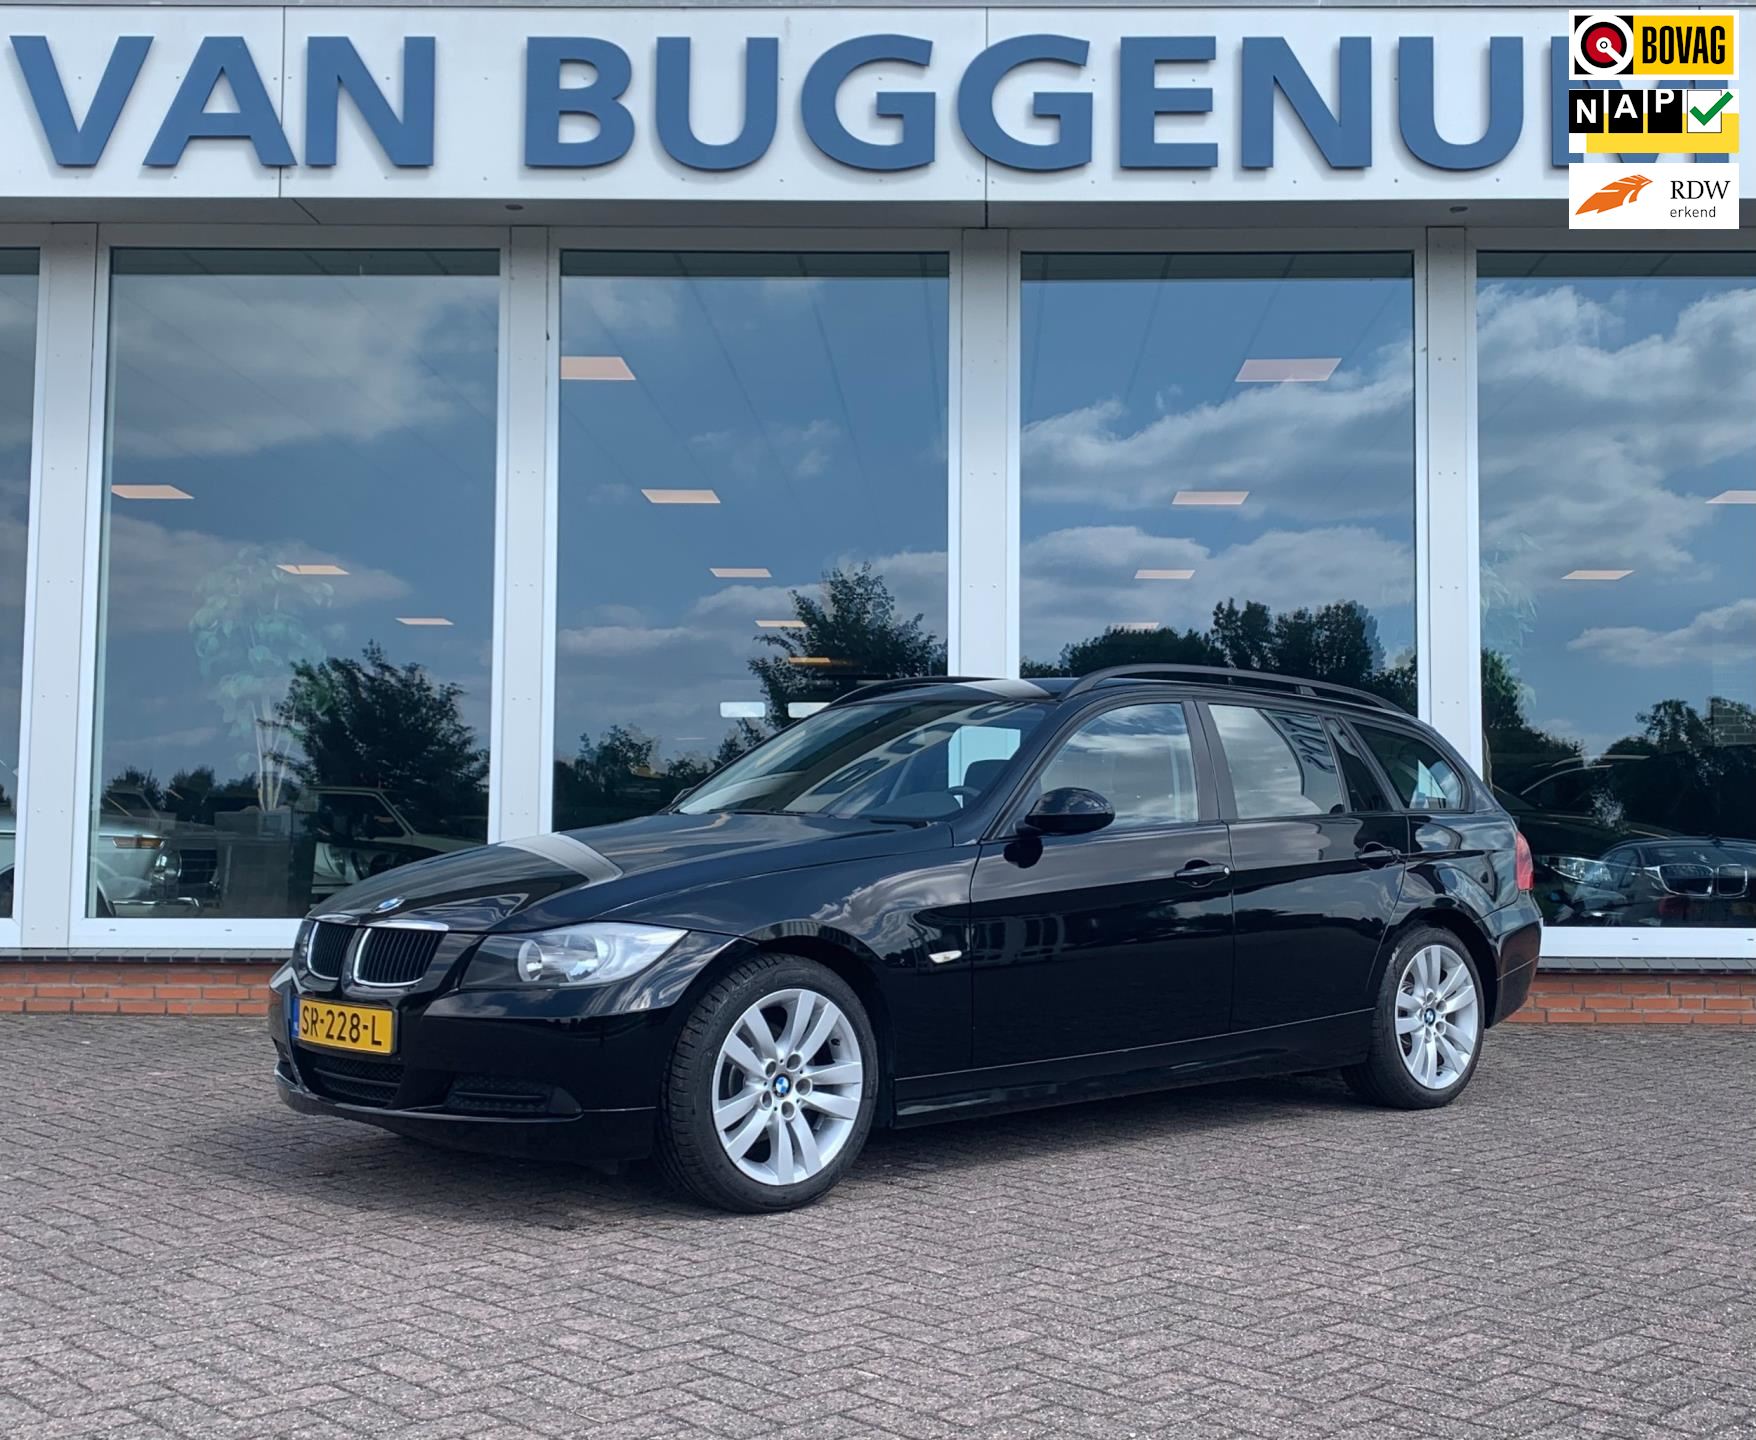 BMW 3-serie Touring occasion - Automobielbedrijf J. van Buggenum